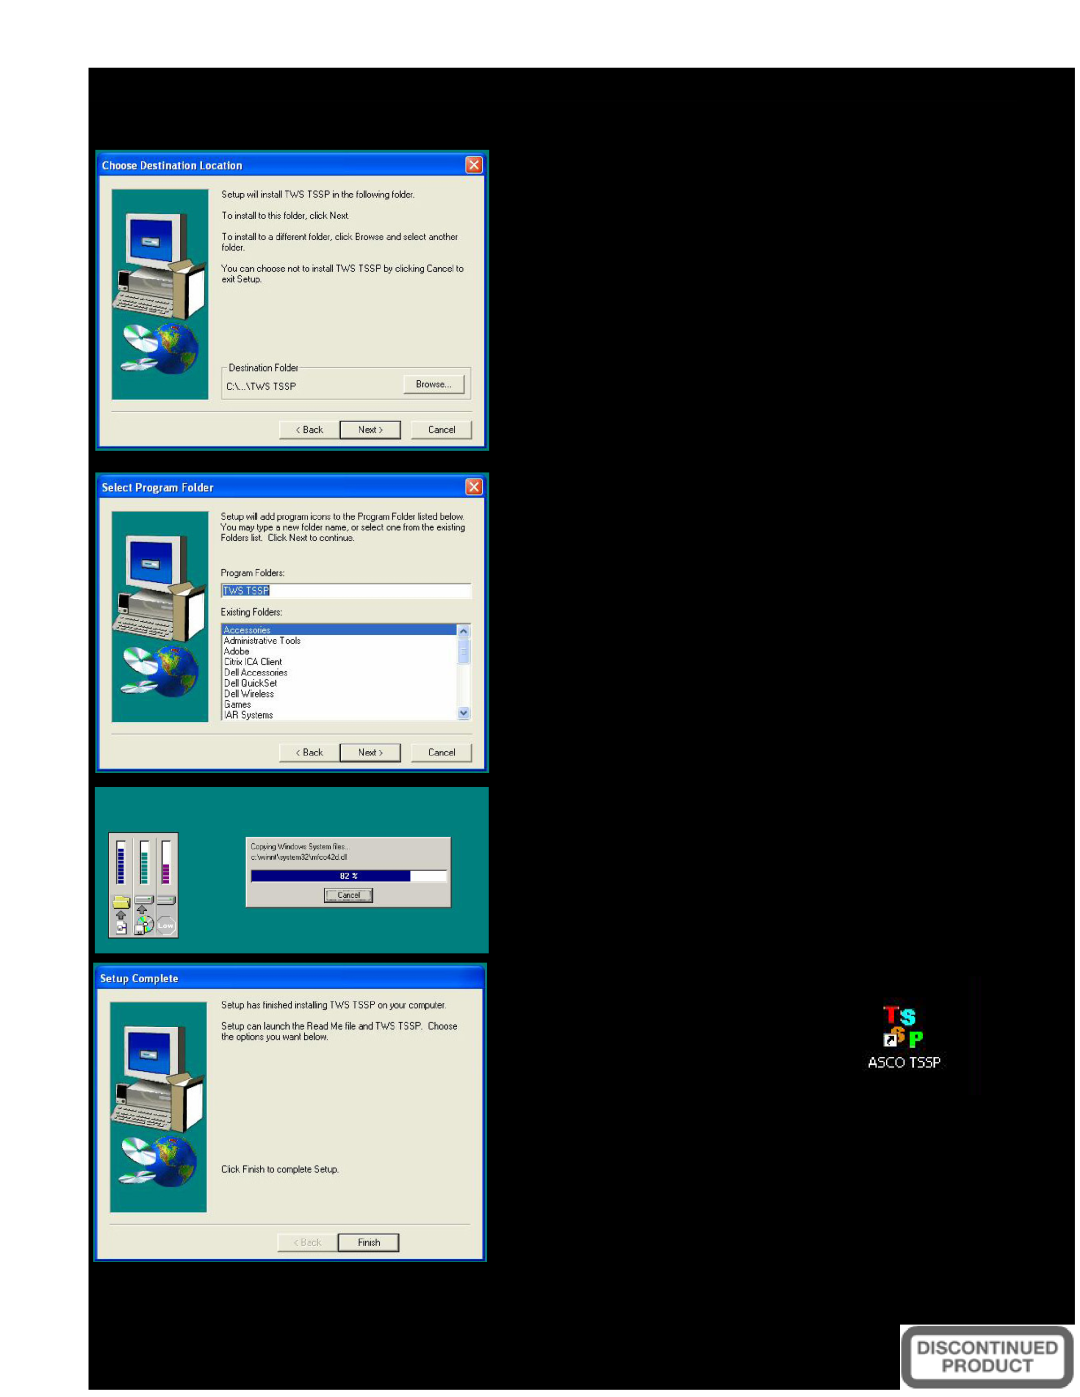 Emerson A5510, 5500 SERIES installation manual Setup Program - Serial Connection, Thin Web Server, Click Next 